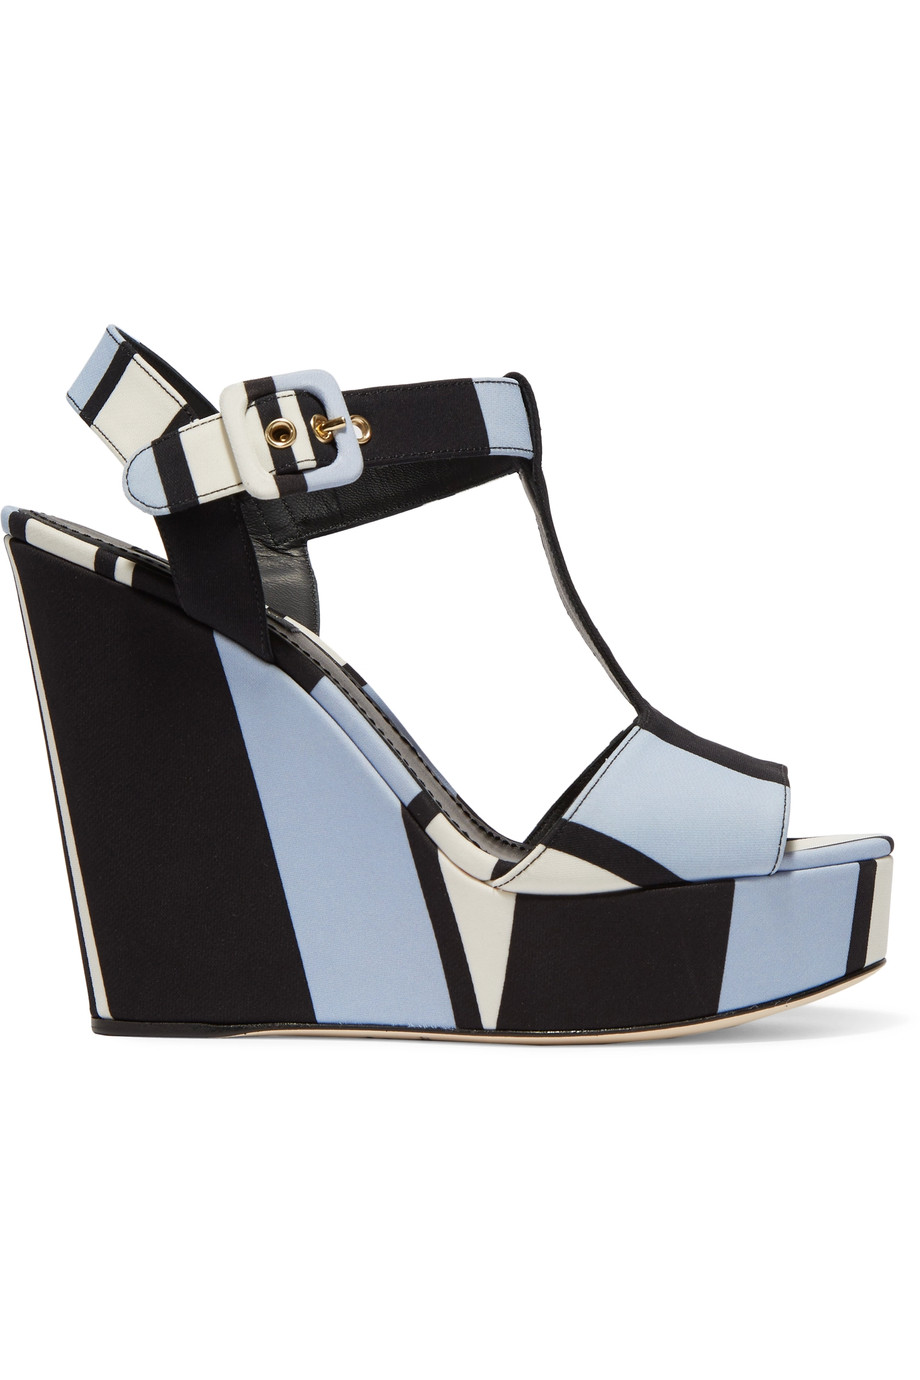 Dolce & Gabbana Striped Canvas Wedge Sandals | ModeSens